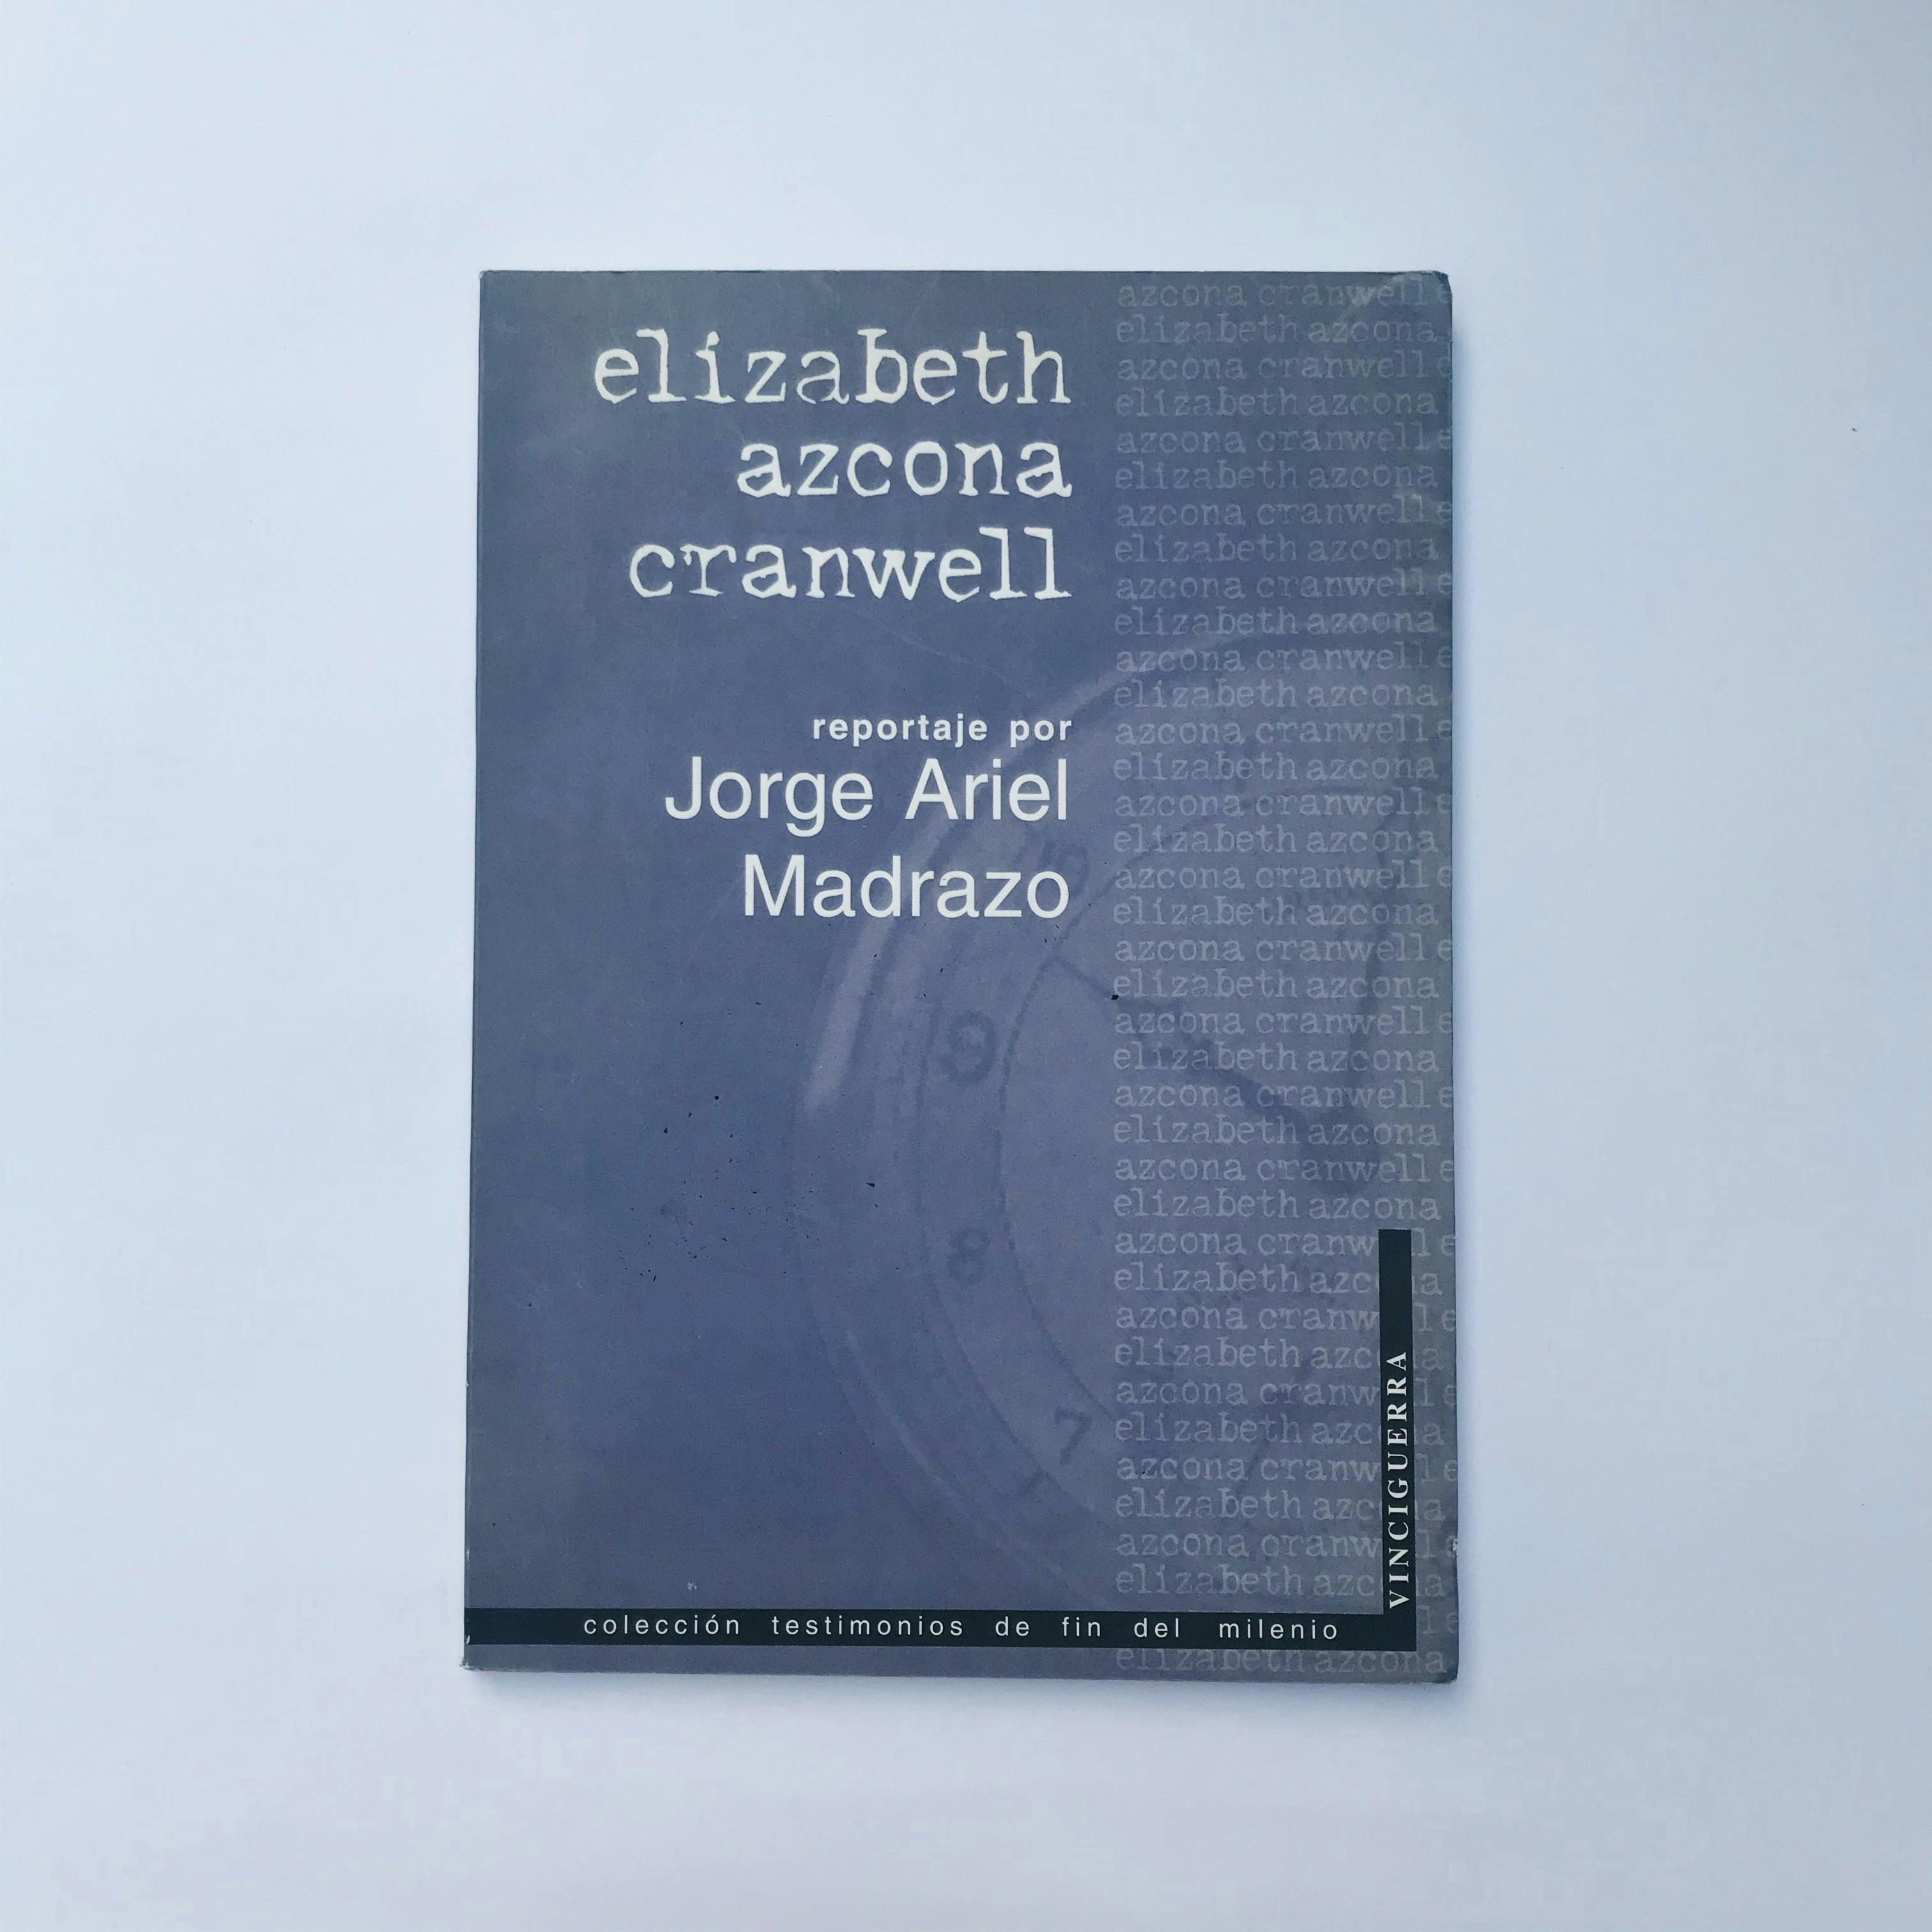 "ELIZABETH AZCONA CRANWELL"